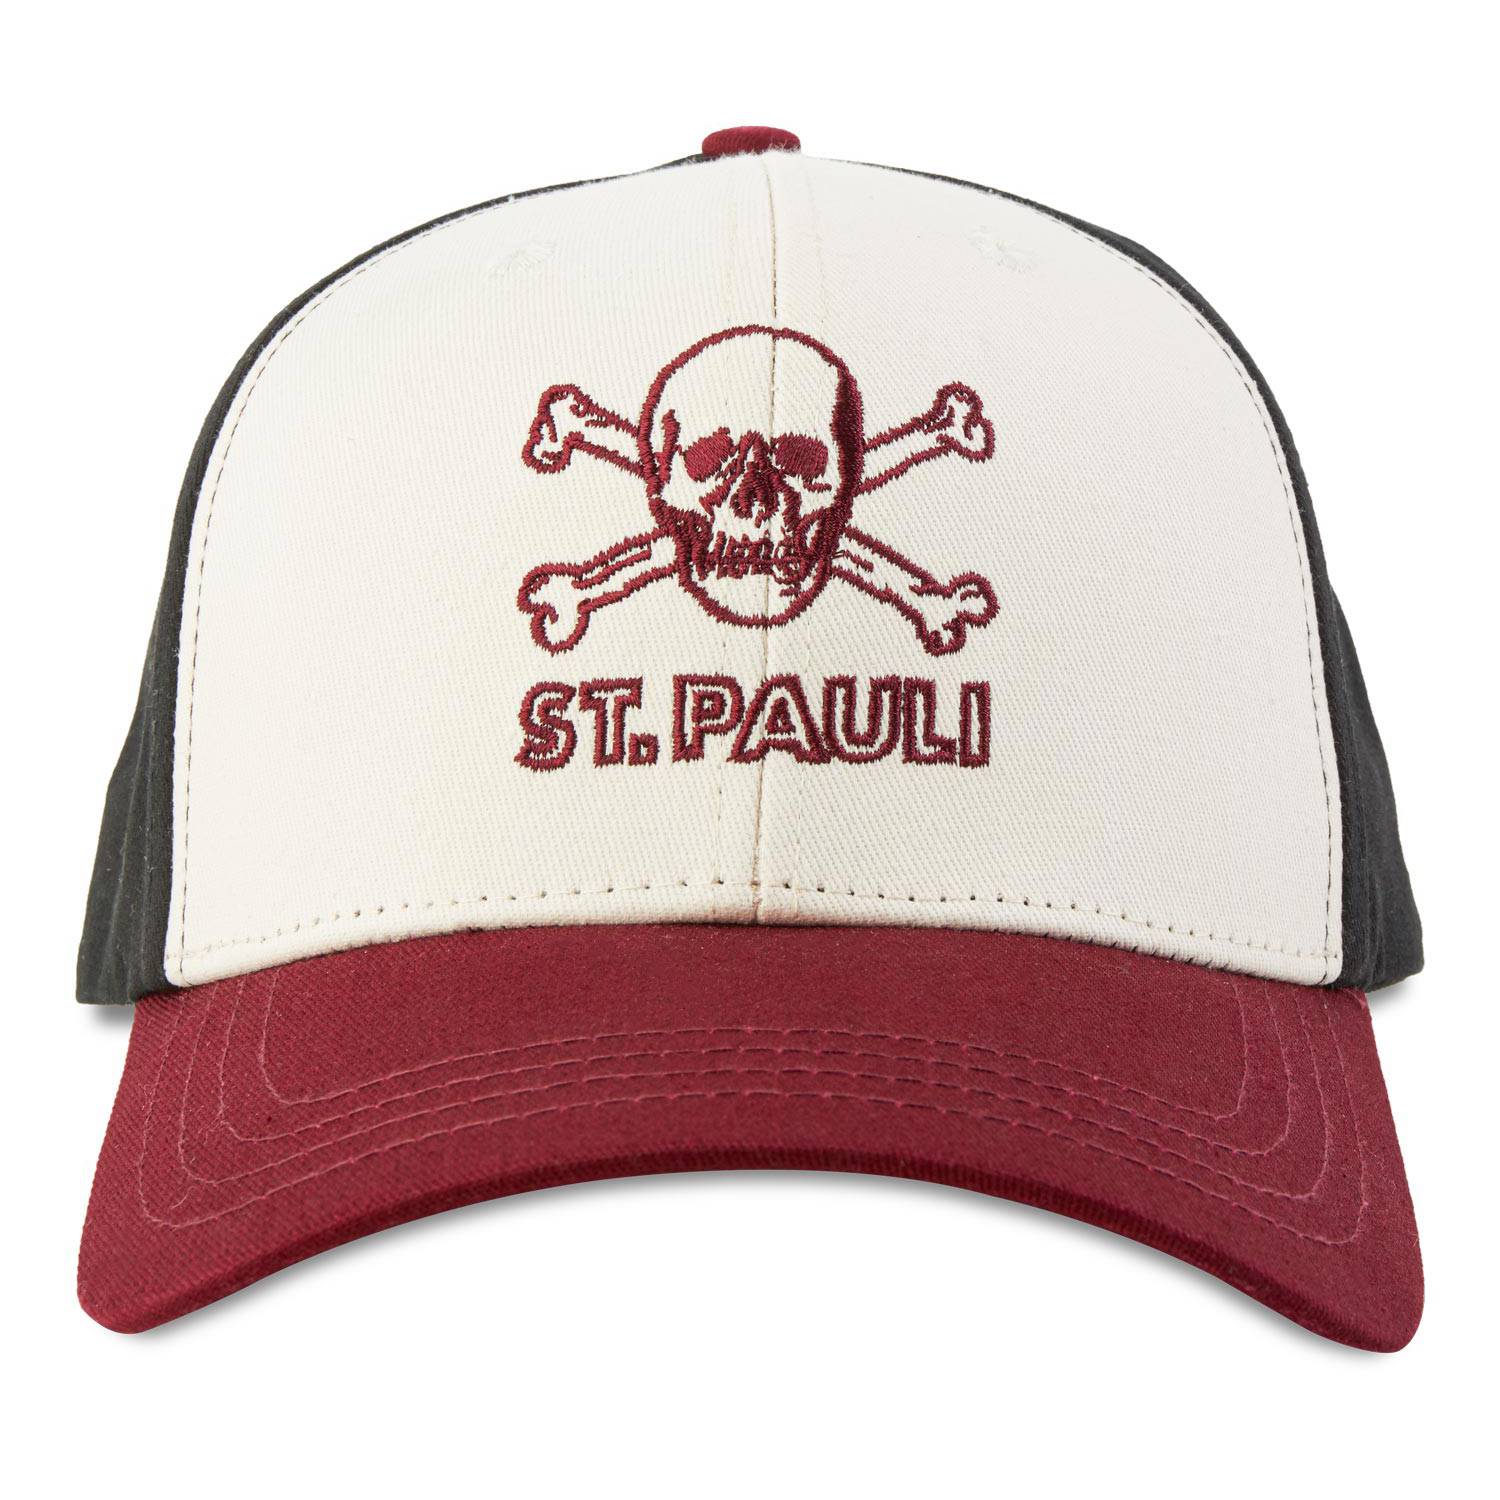 FC St. Pauli - Kappe - Baseball Totenkopf - dunkelrot/creme/schwarz